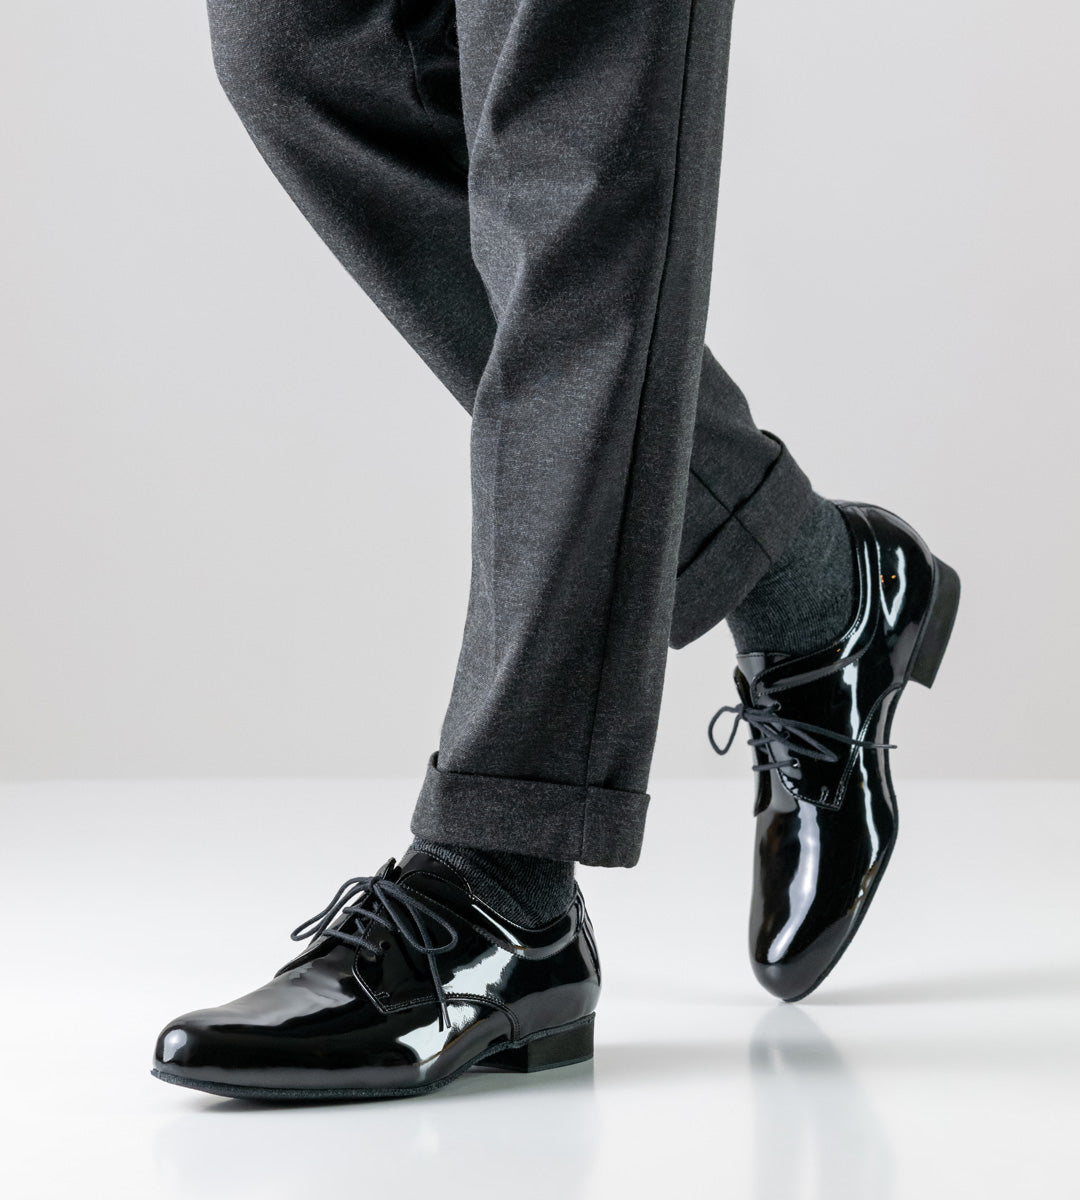 Werner Kern Arezzo Lack Soft Black Patent Leather Men's Ballroom Dance Shoe